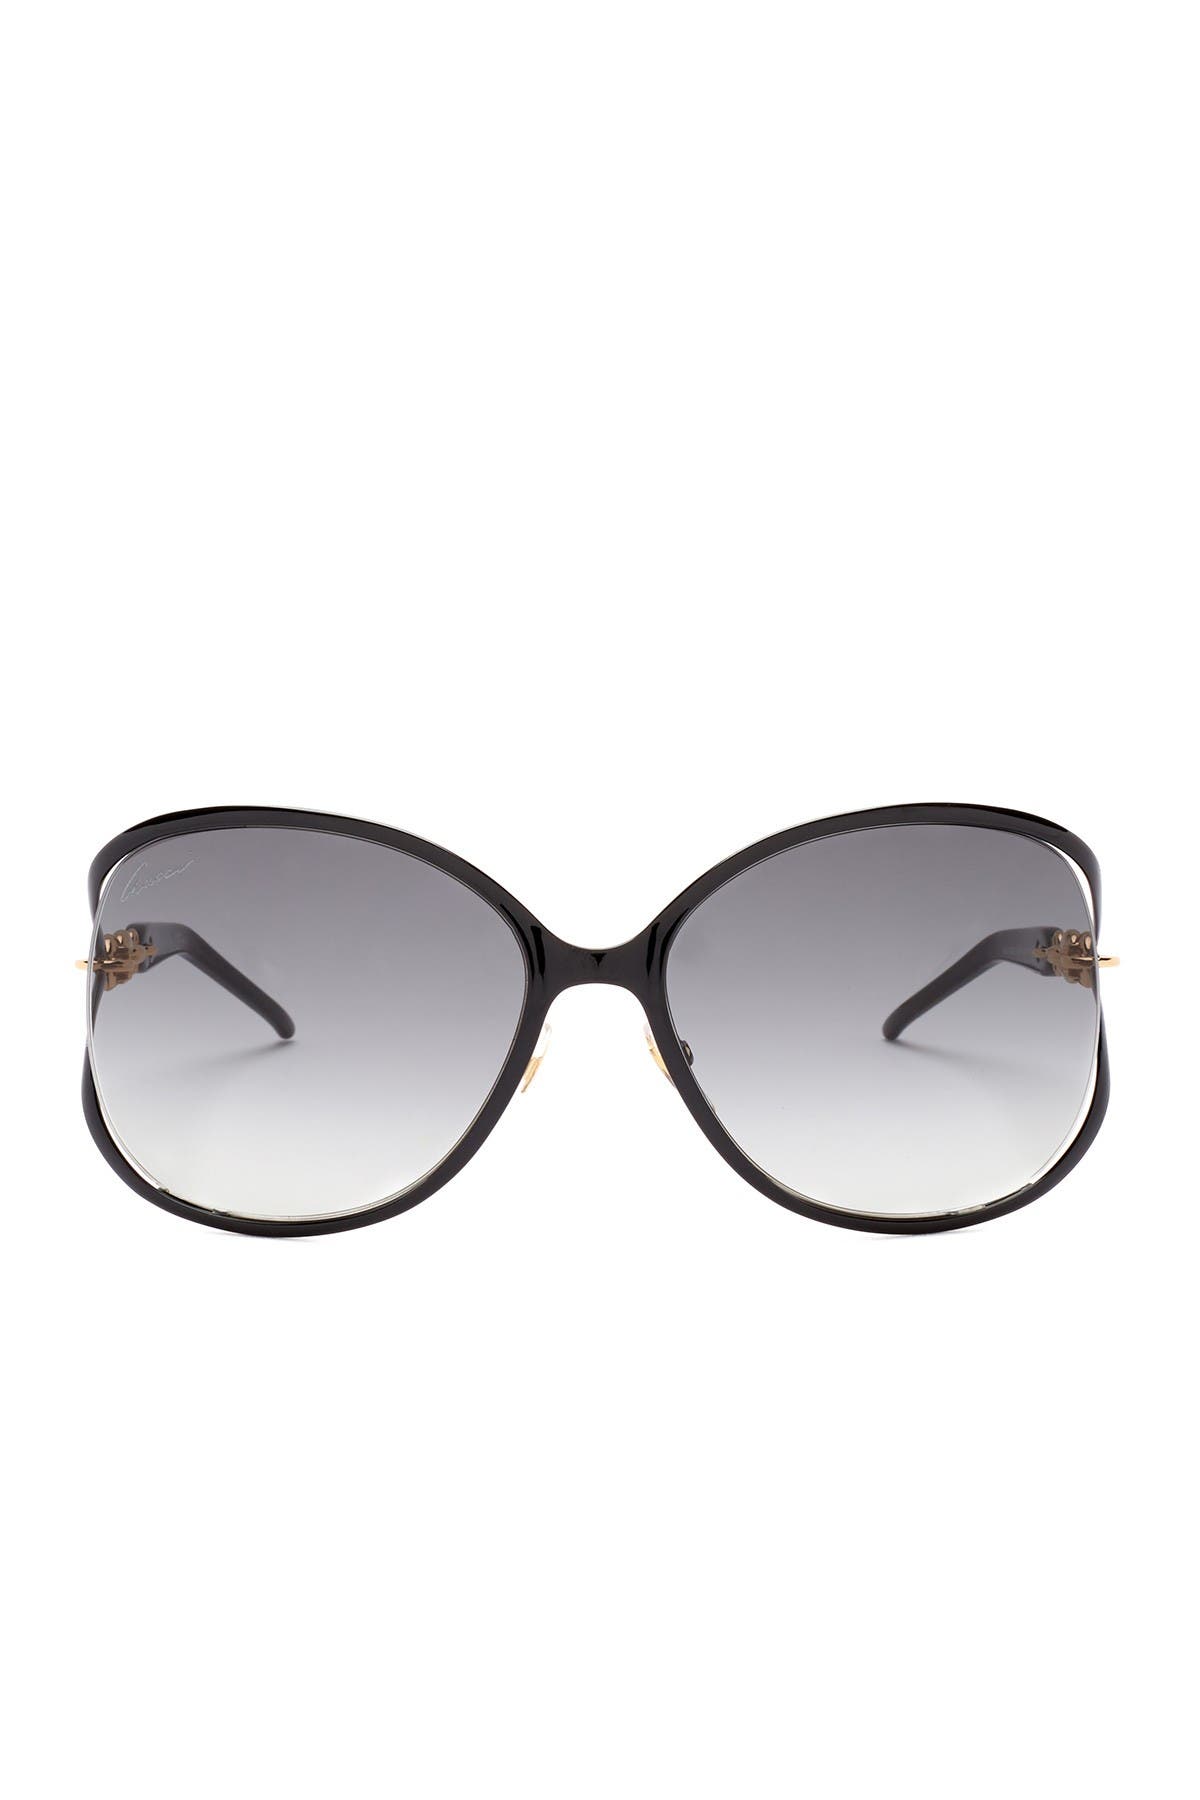 gucci women's butterfly sunglasses